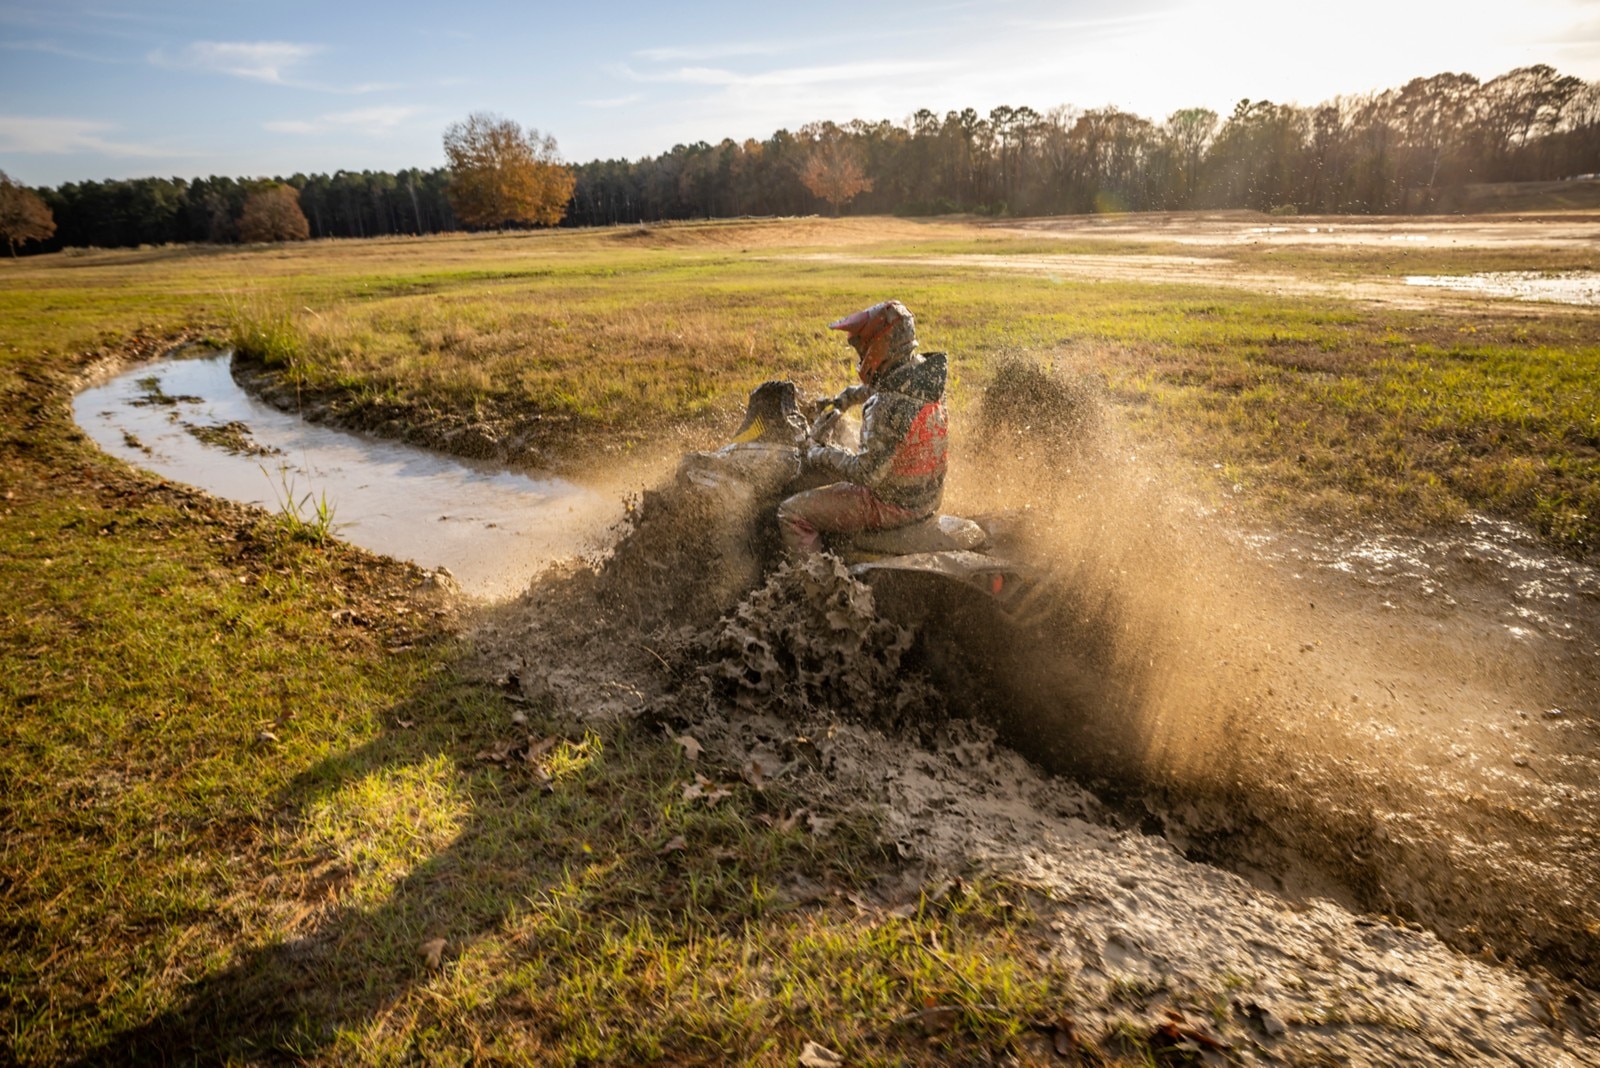 Osta Cruiser riding through a muddy field on his Can-Am ATV